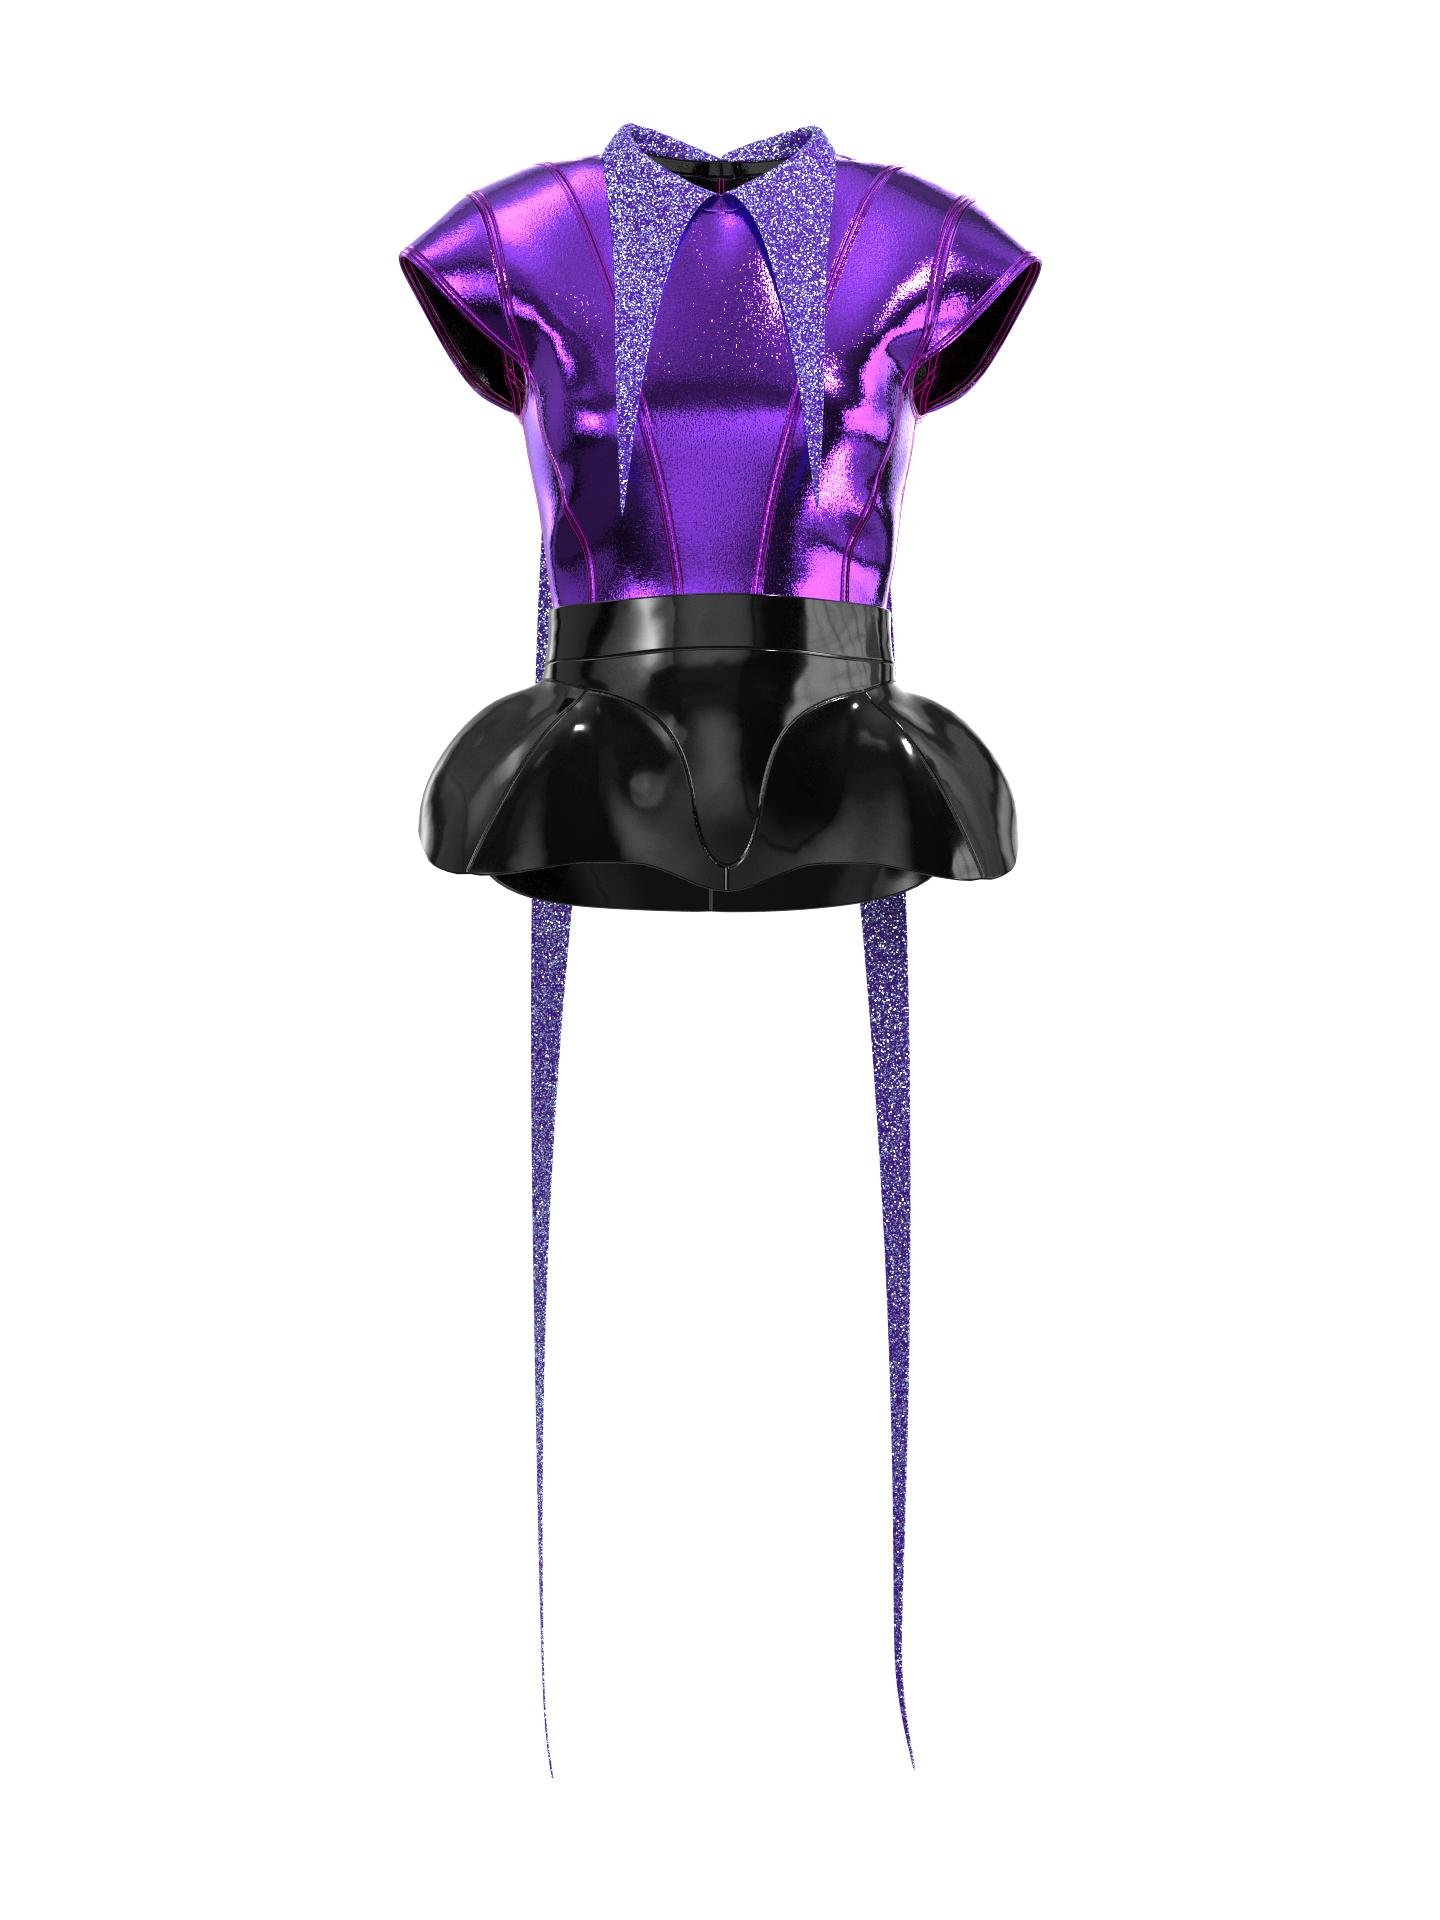 Robo-insect Peplum Top by C.GITAL